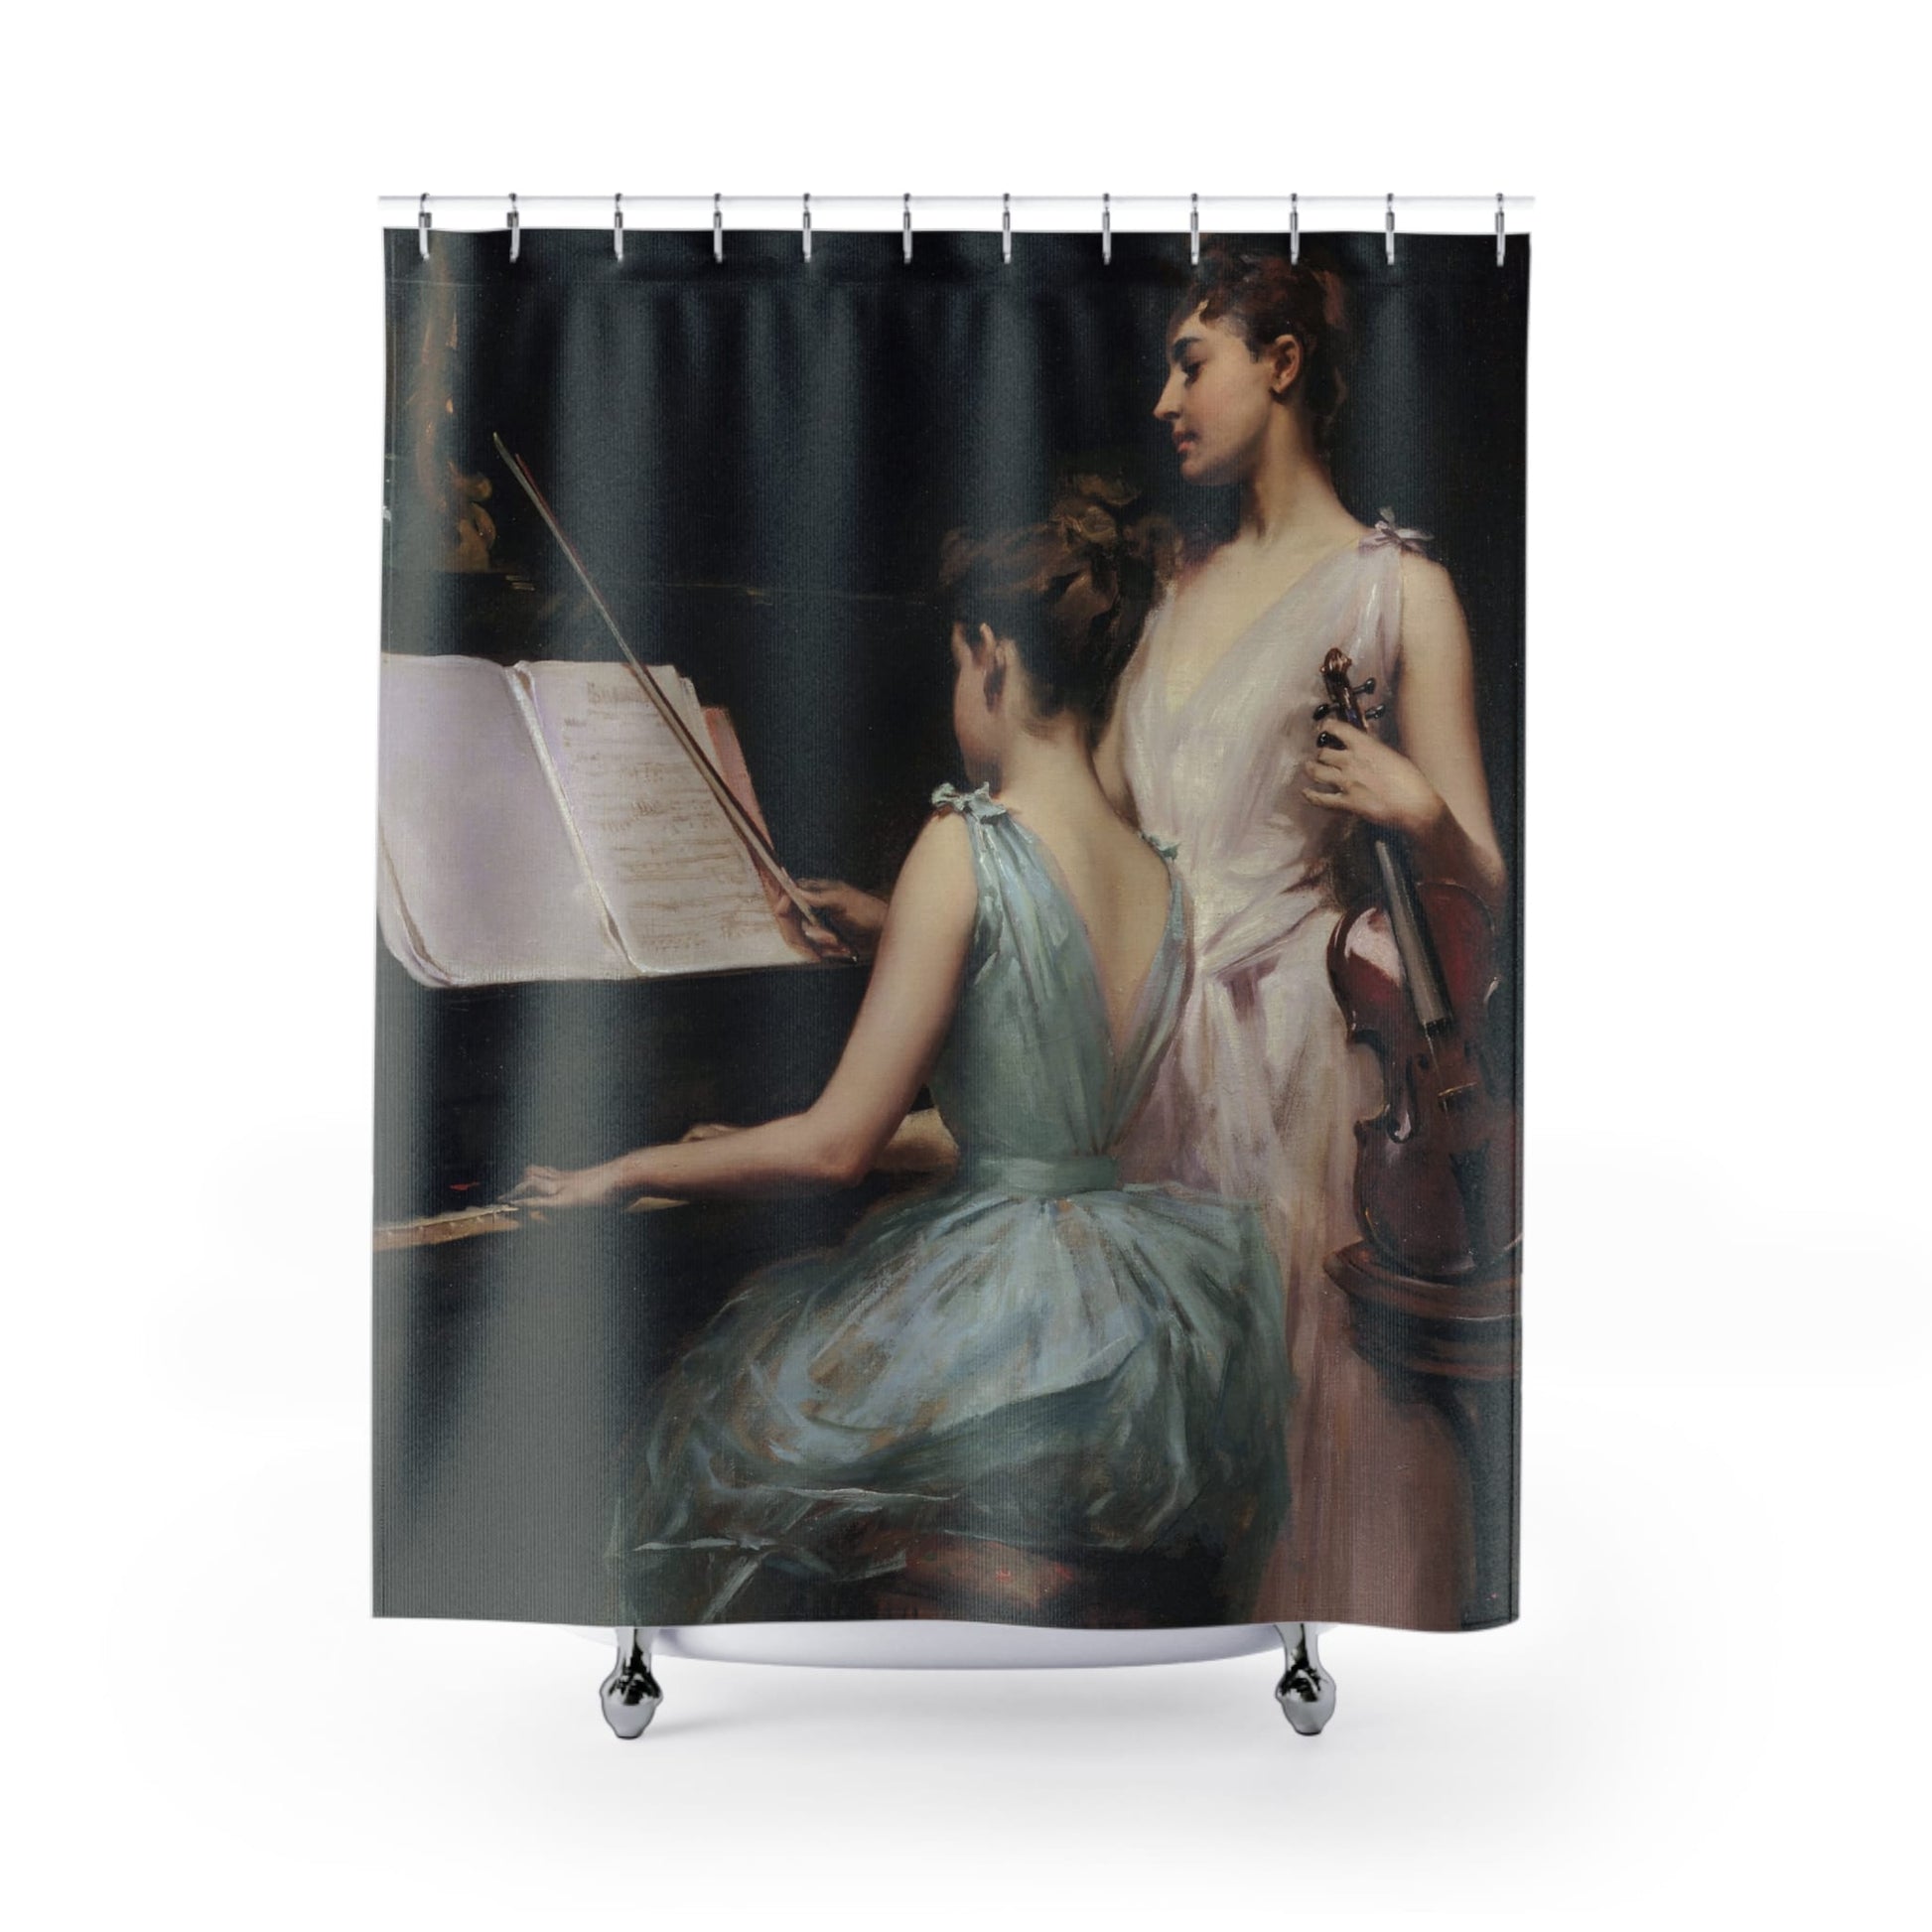 Victorian Era Music Shower Curtain with The Sonata design, classical bathroom decor featuring musical themes from the Victorian era.